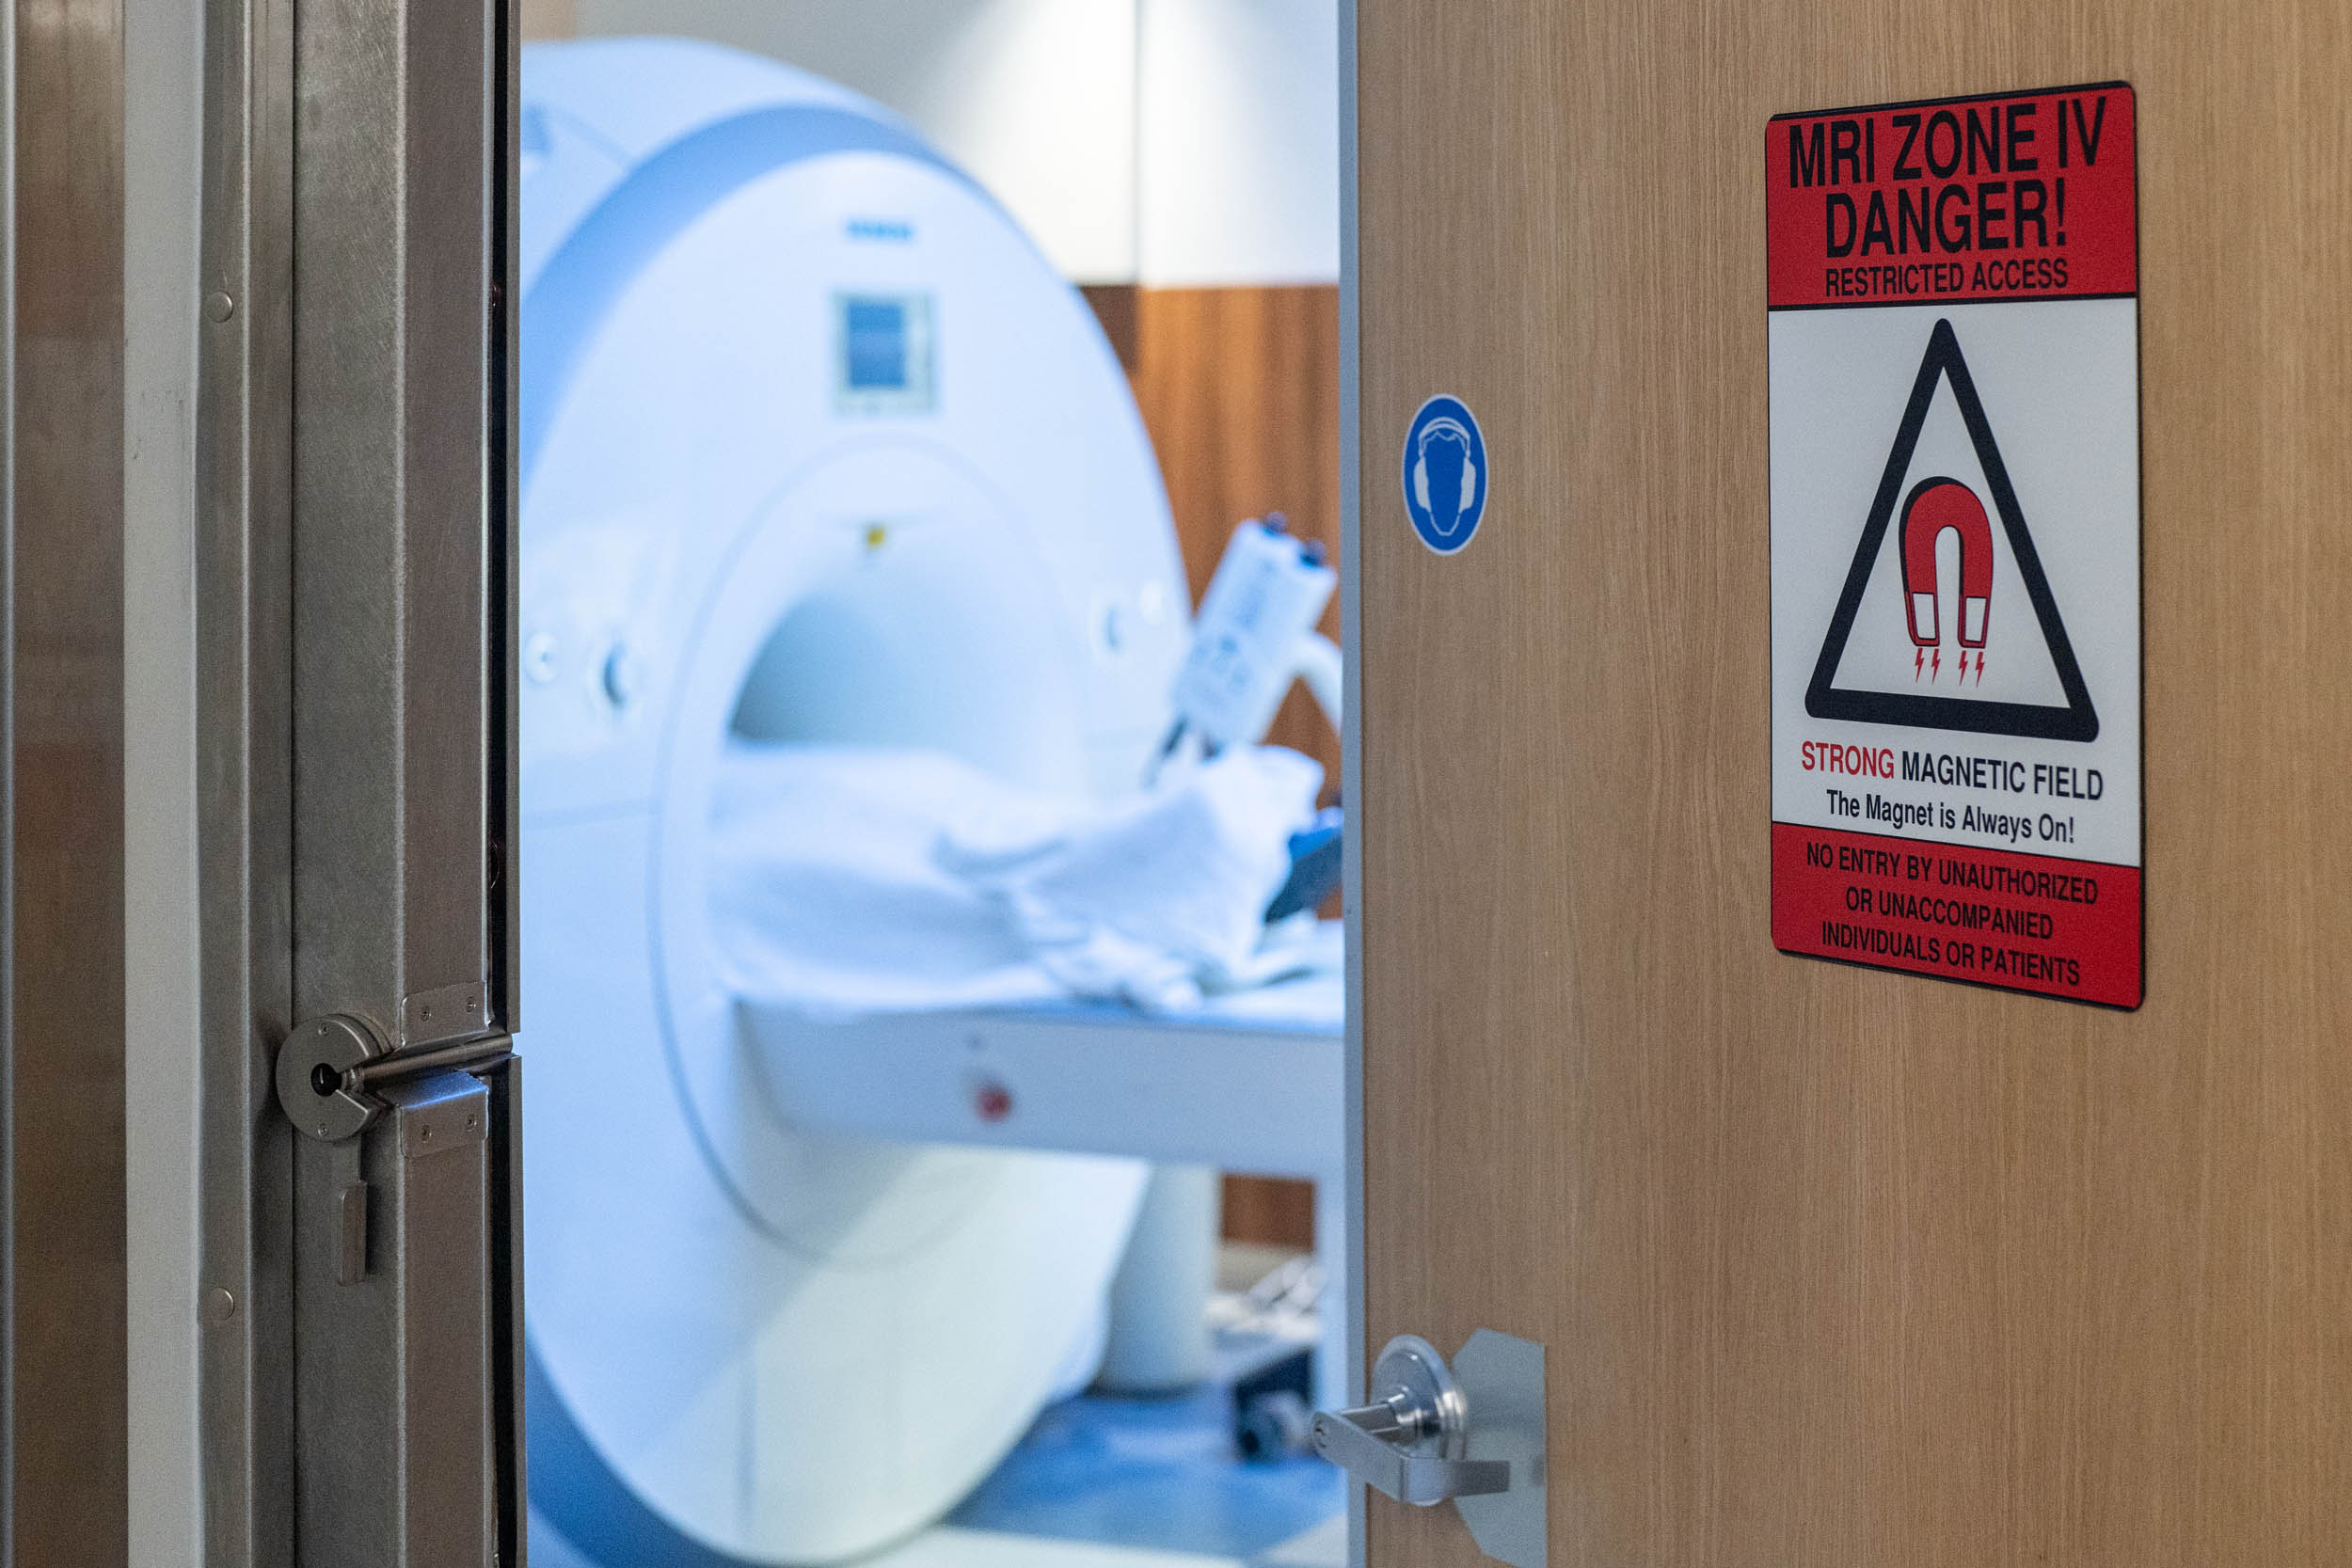 Door to a MRI open so that we can see the machine.  Door reads MRI Zone Danger!